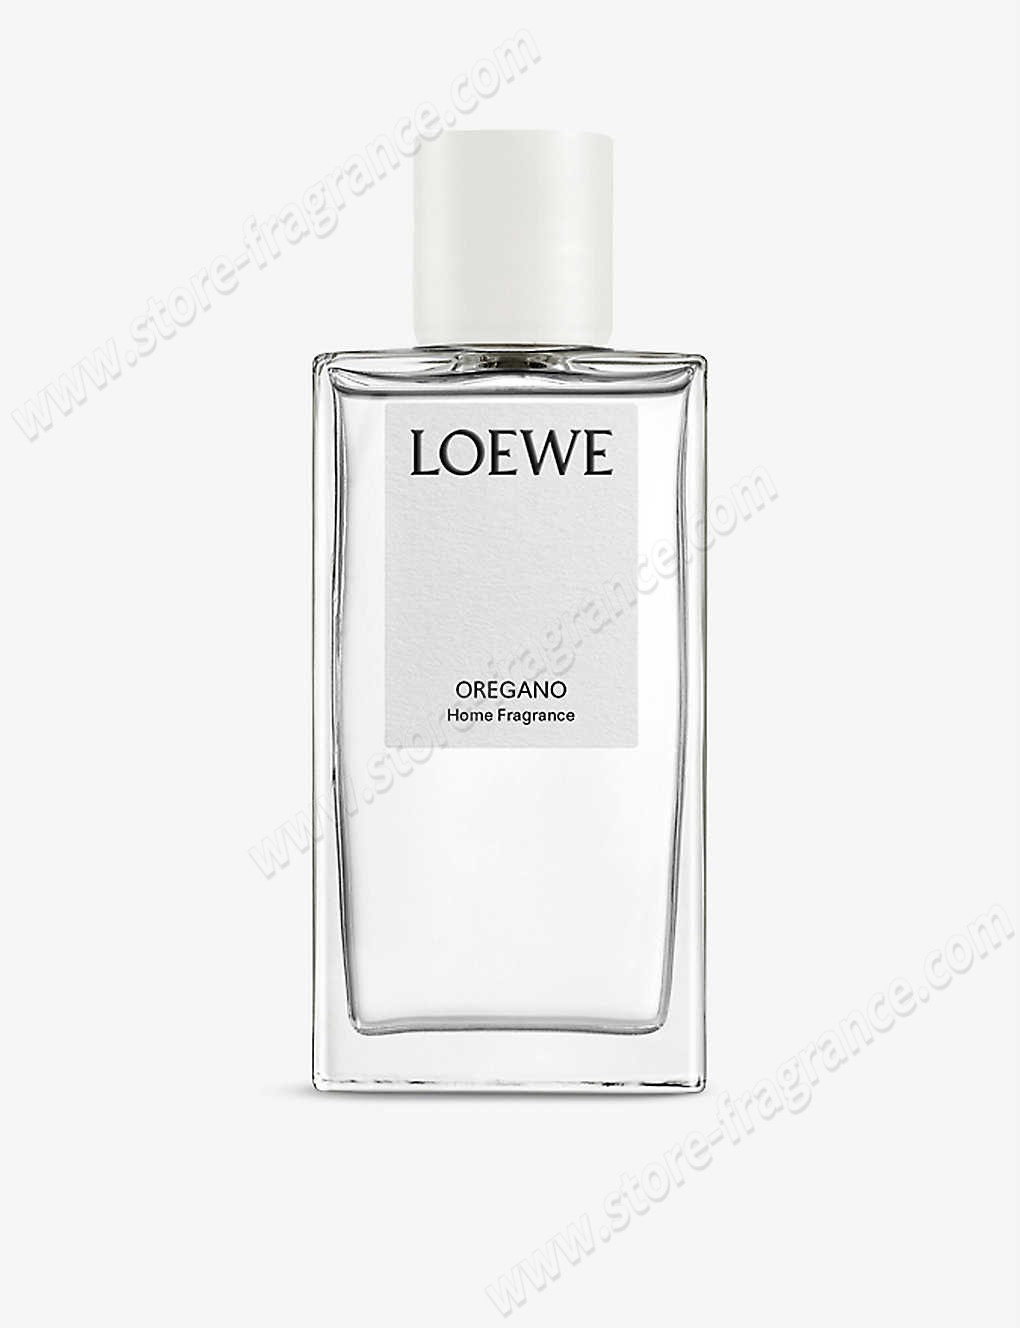 LOEWE/Oregano room spray 150ml ✿ Discount Store - -0